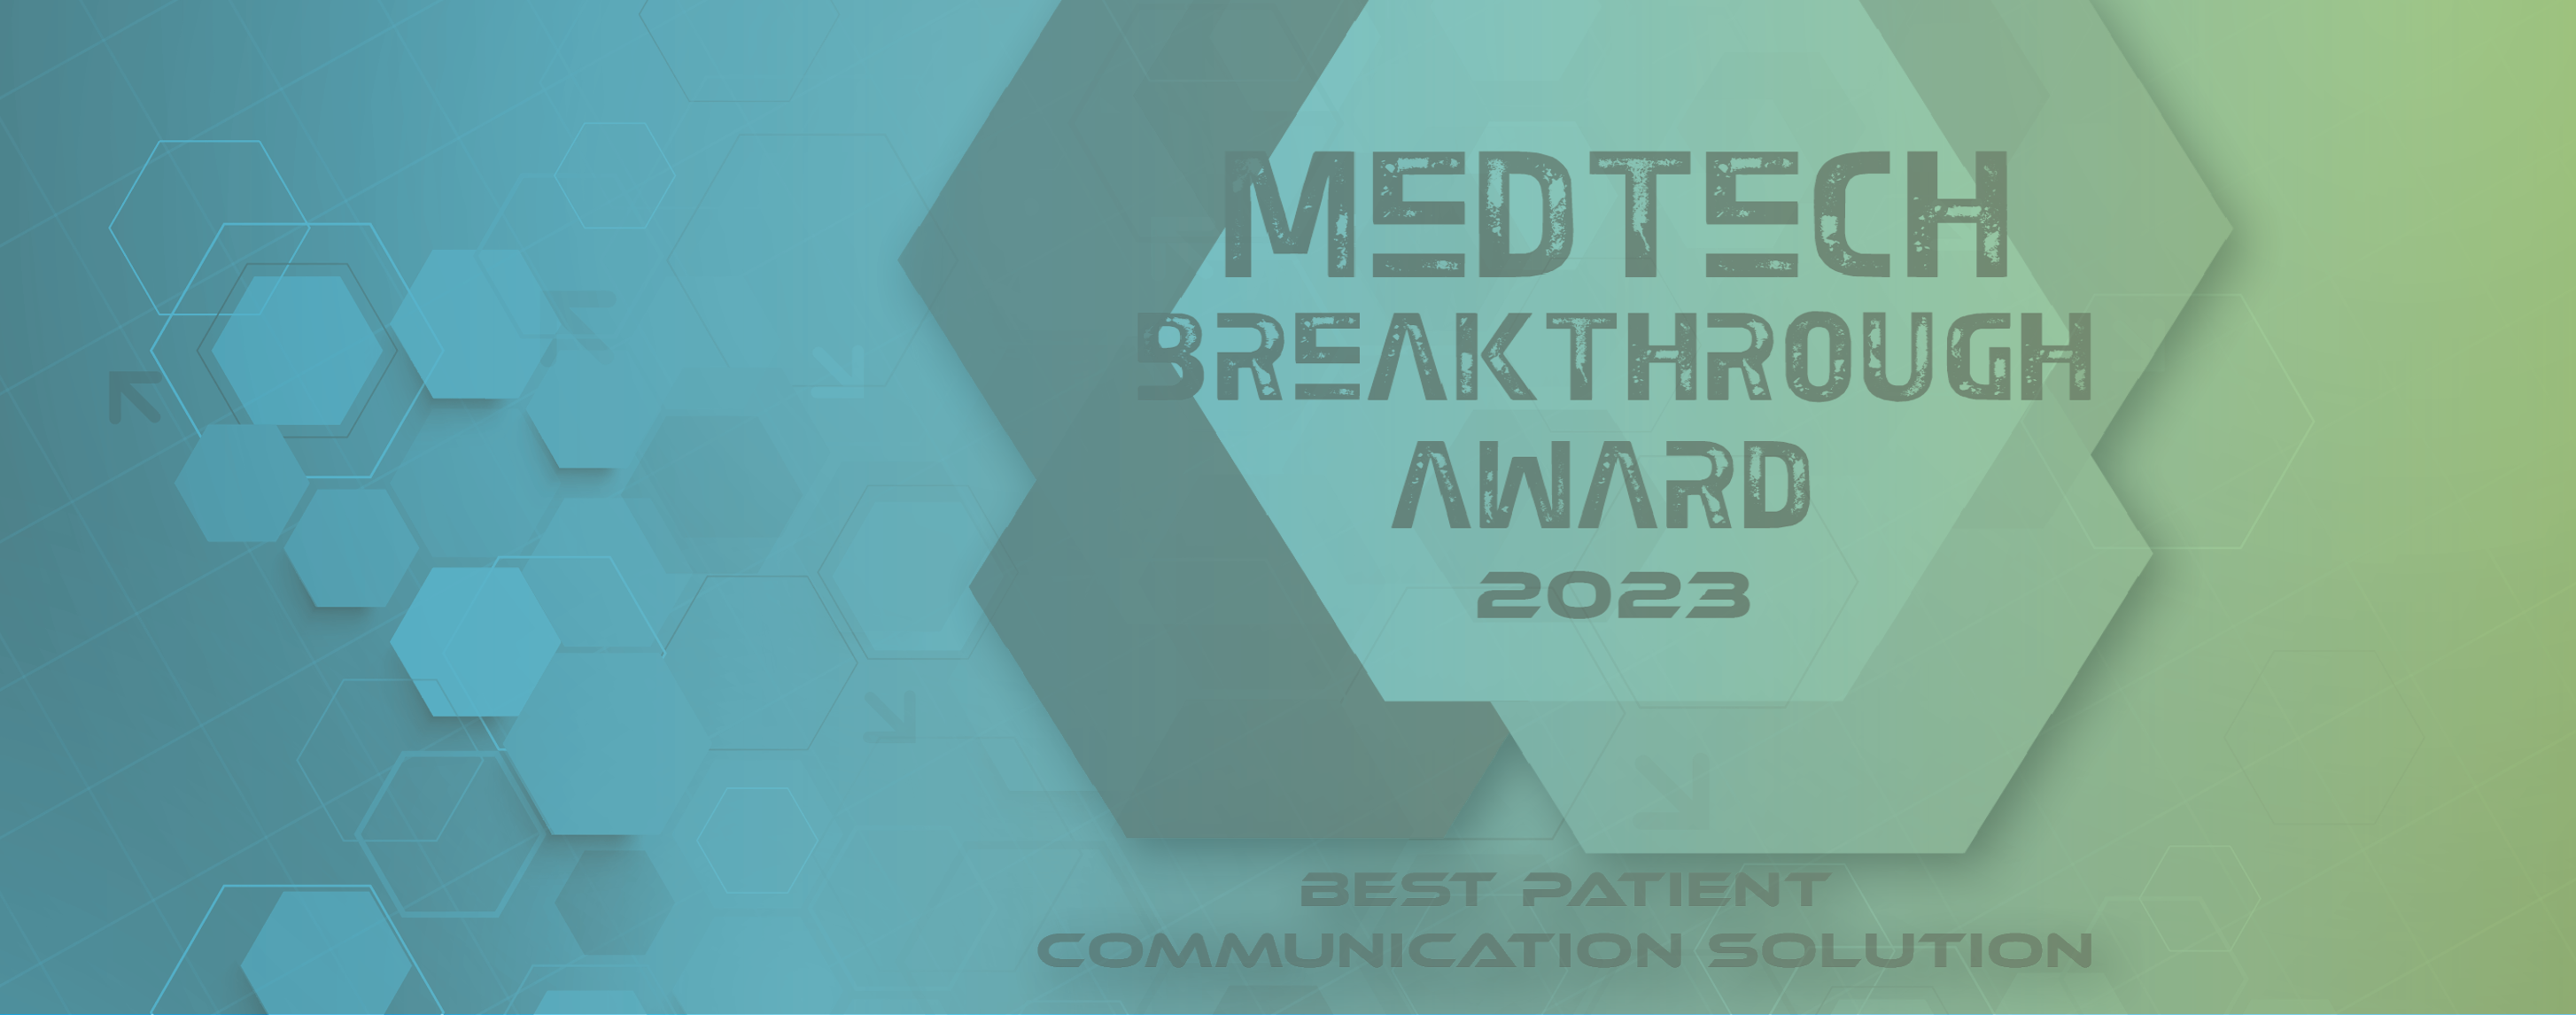 TeleVox Named “Best Patient Communication Solution” in 2023 MedTech Breakthrough Awards Program